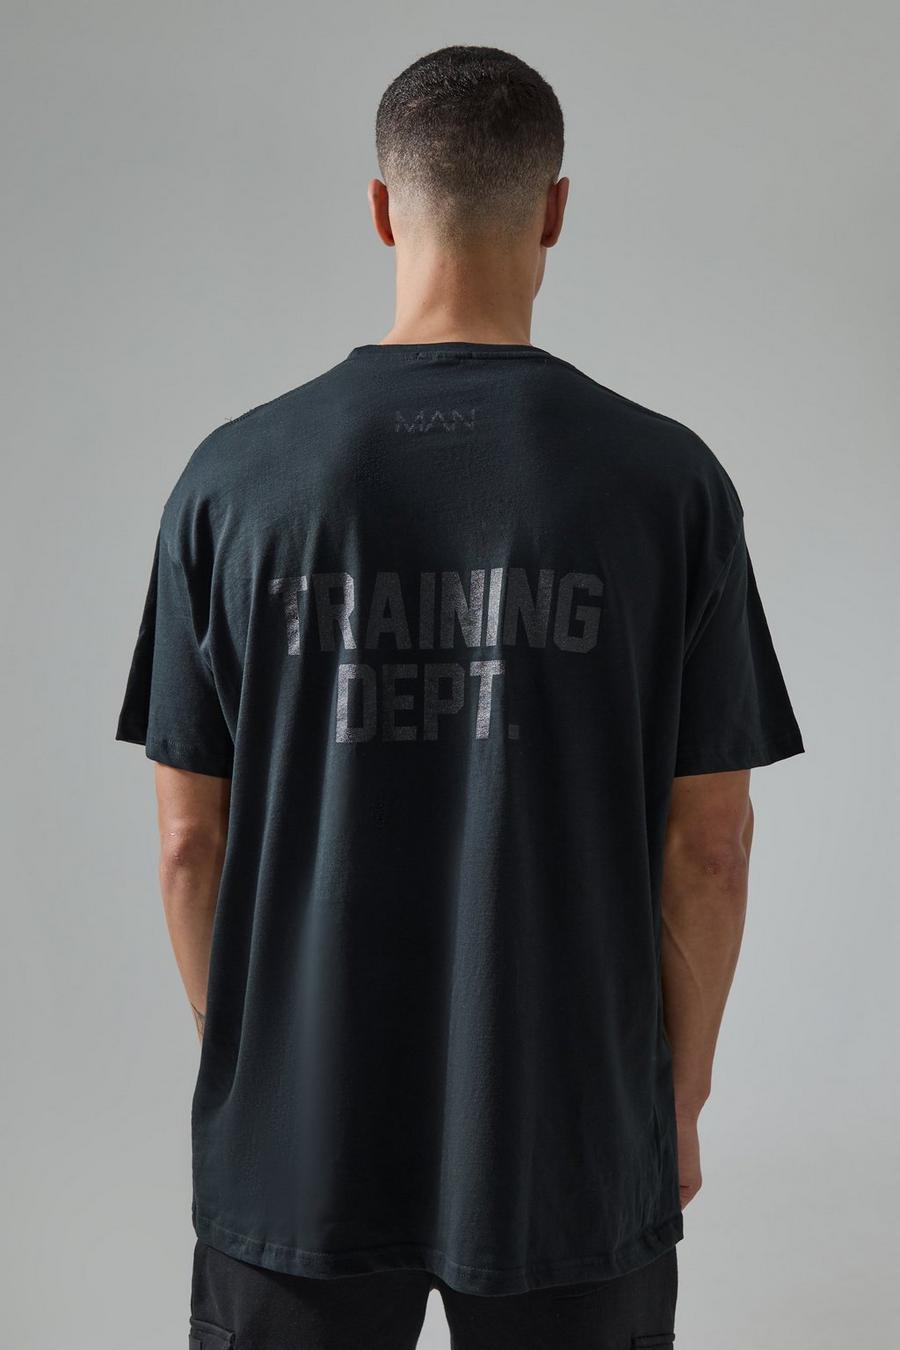 T-shirt oversize Active Training Dept, Black negro